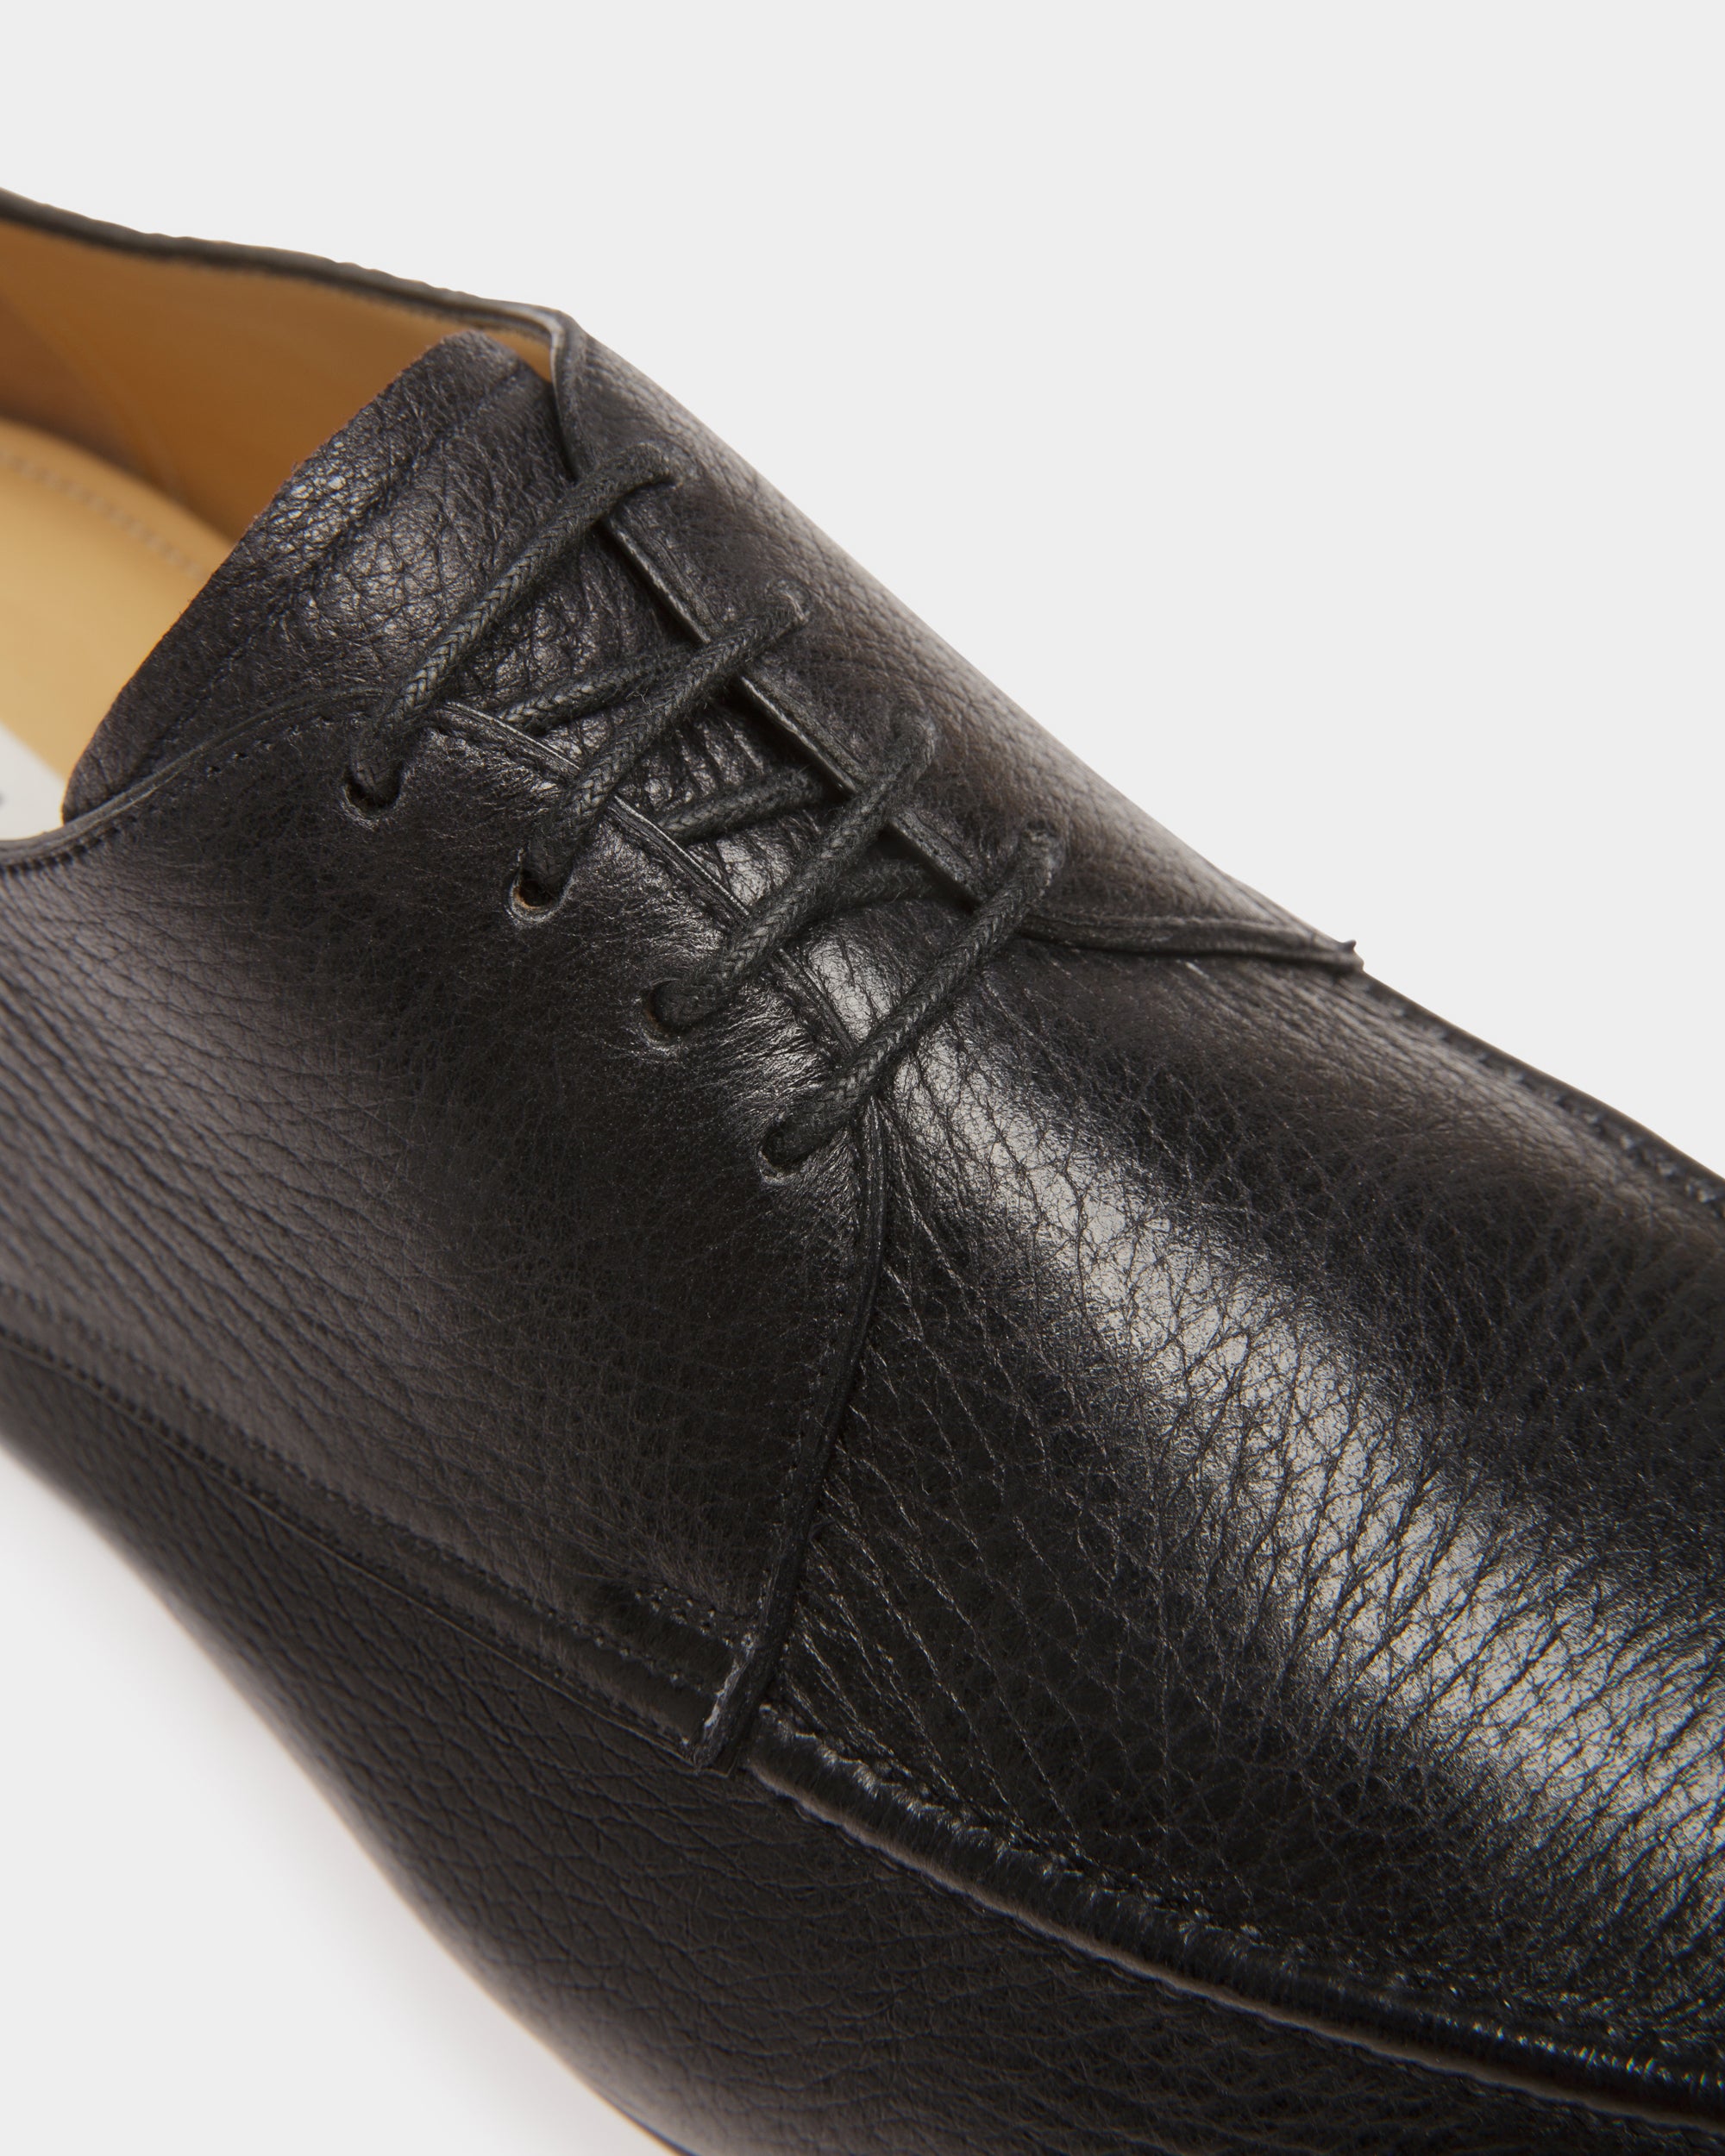 Shop Luxury Leather Shoes for Men in Dubai & Abu Dhabi | Bally